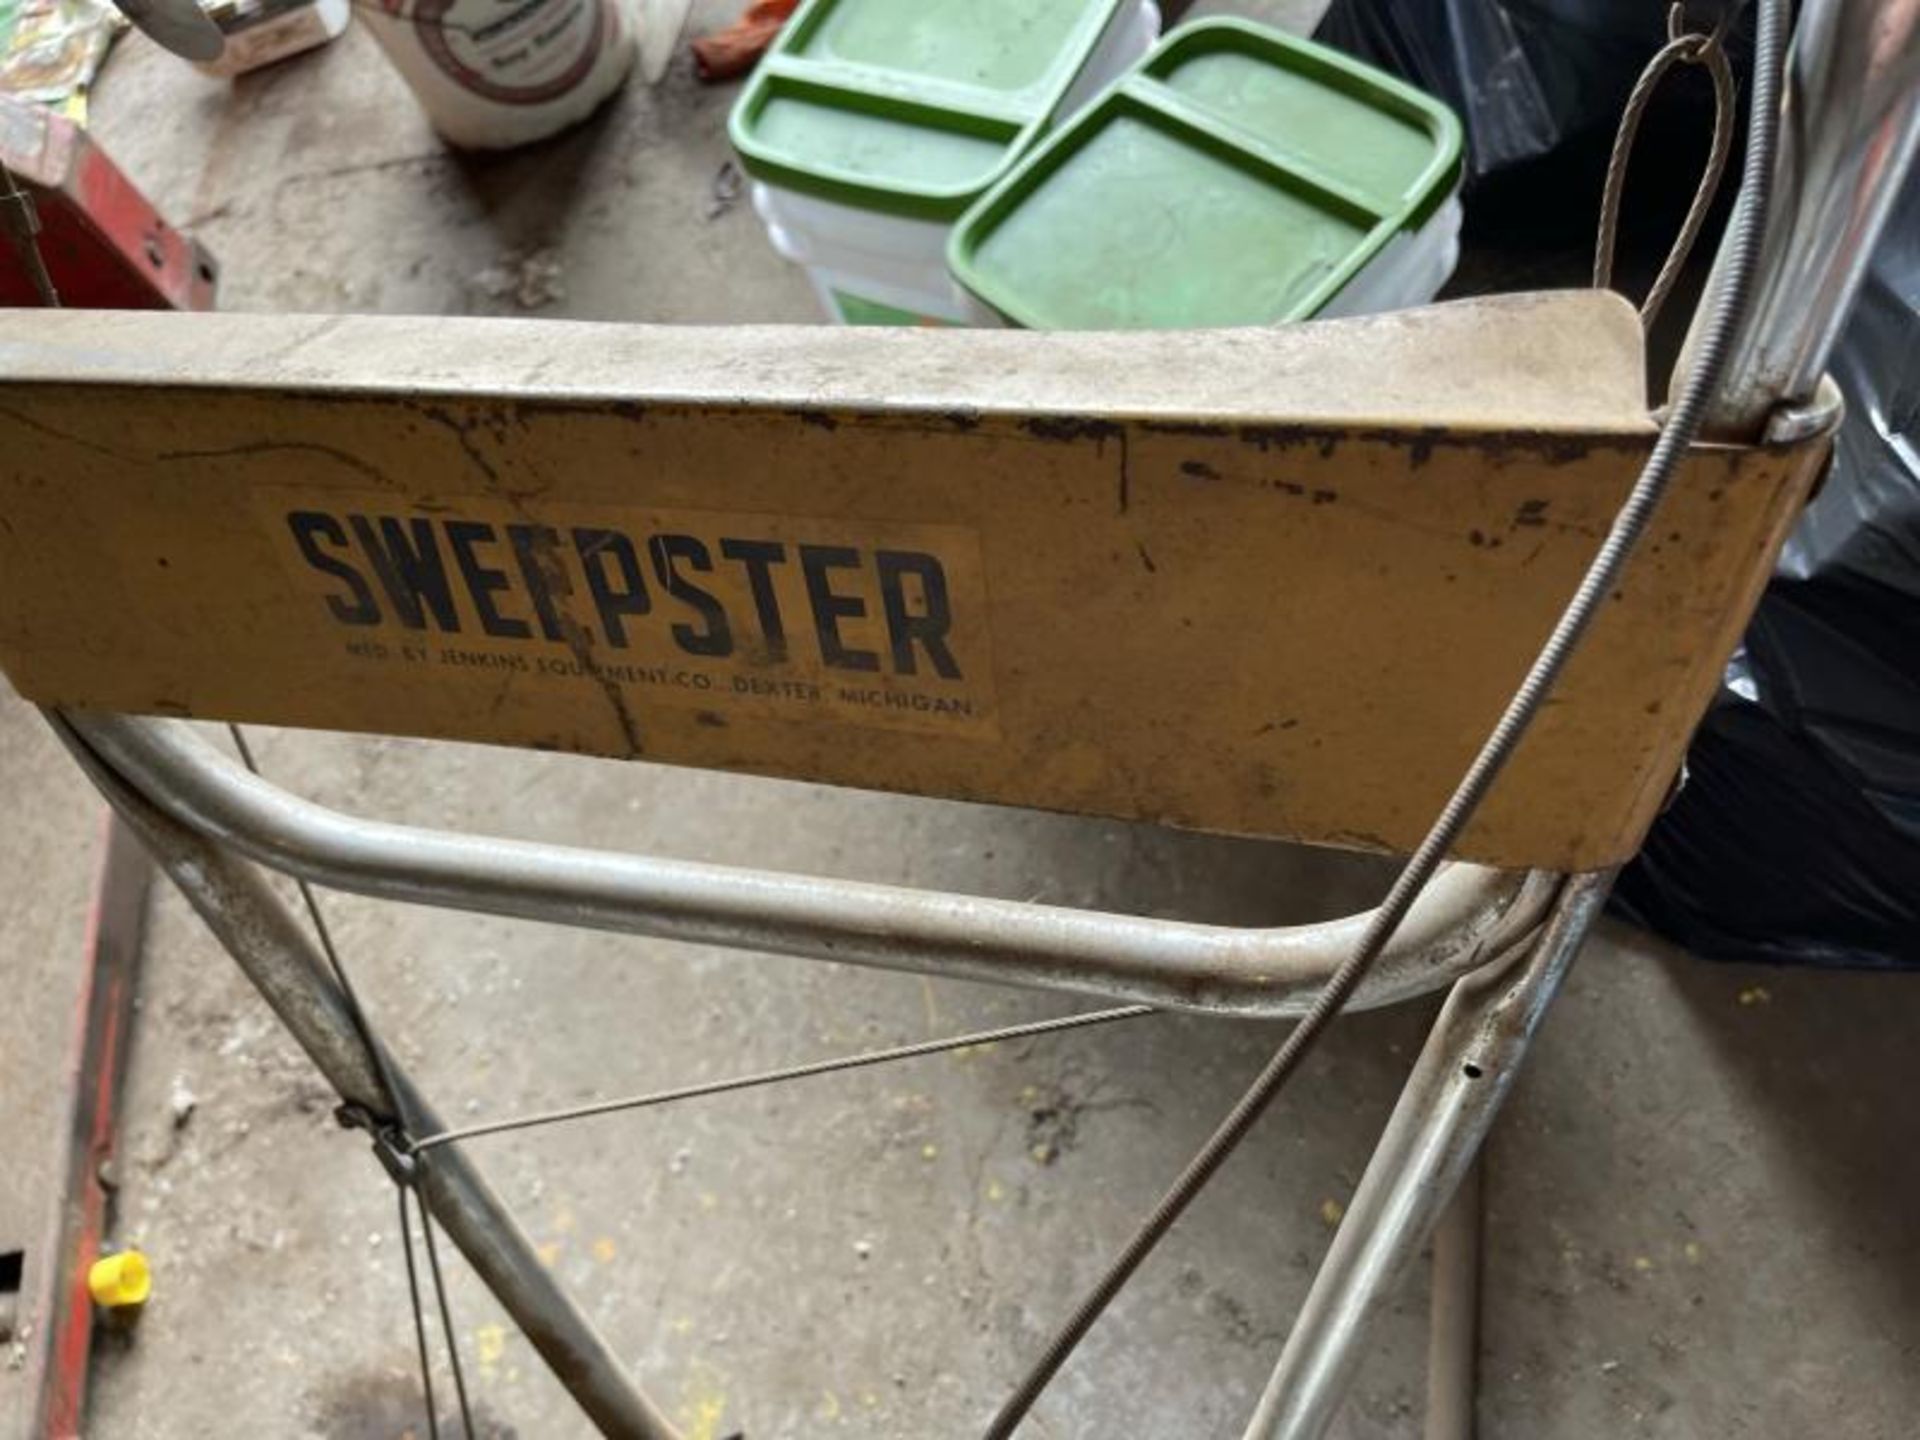 Sweepster sweeper - Image 2 of 4